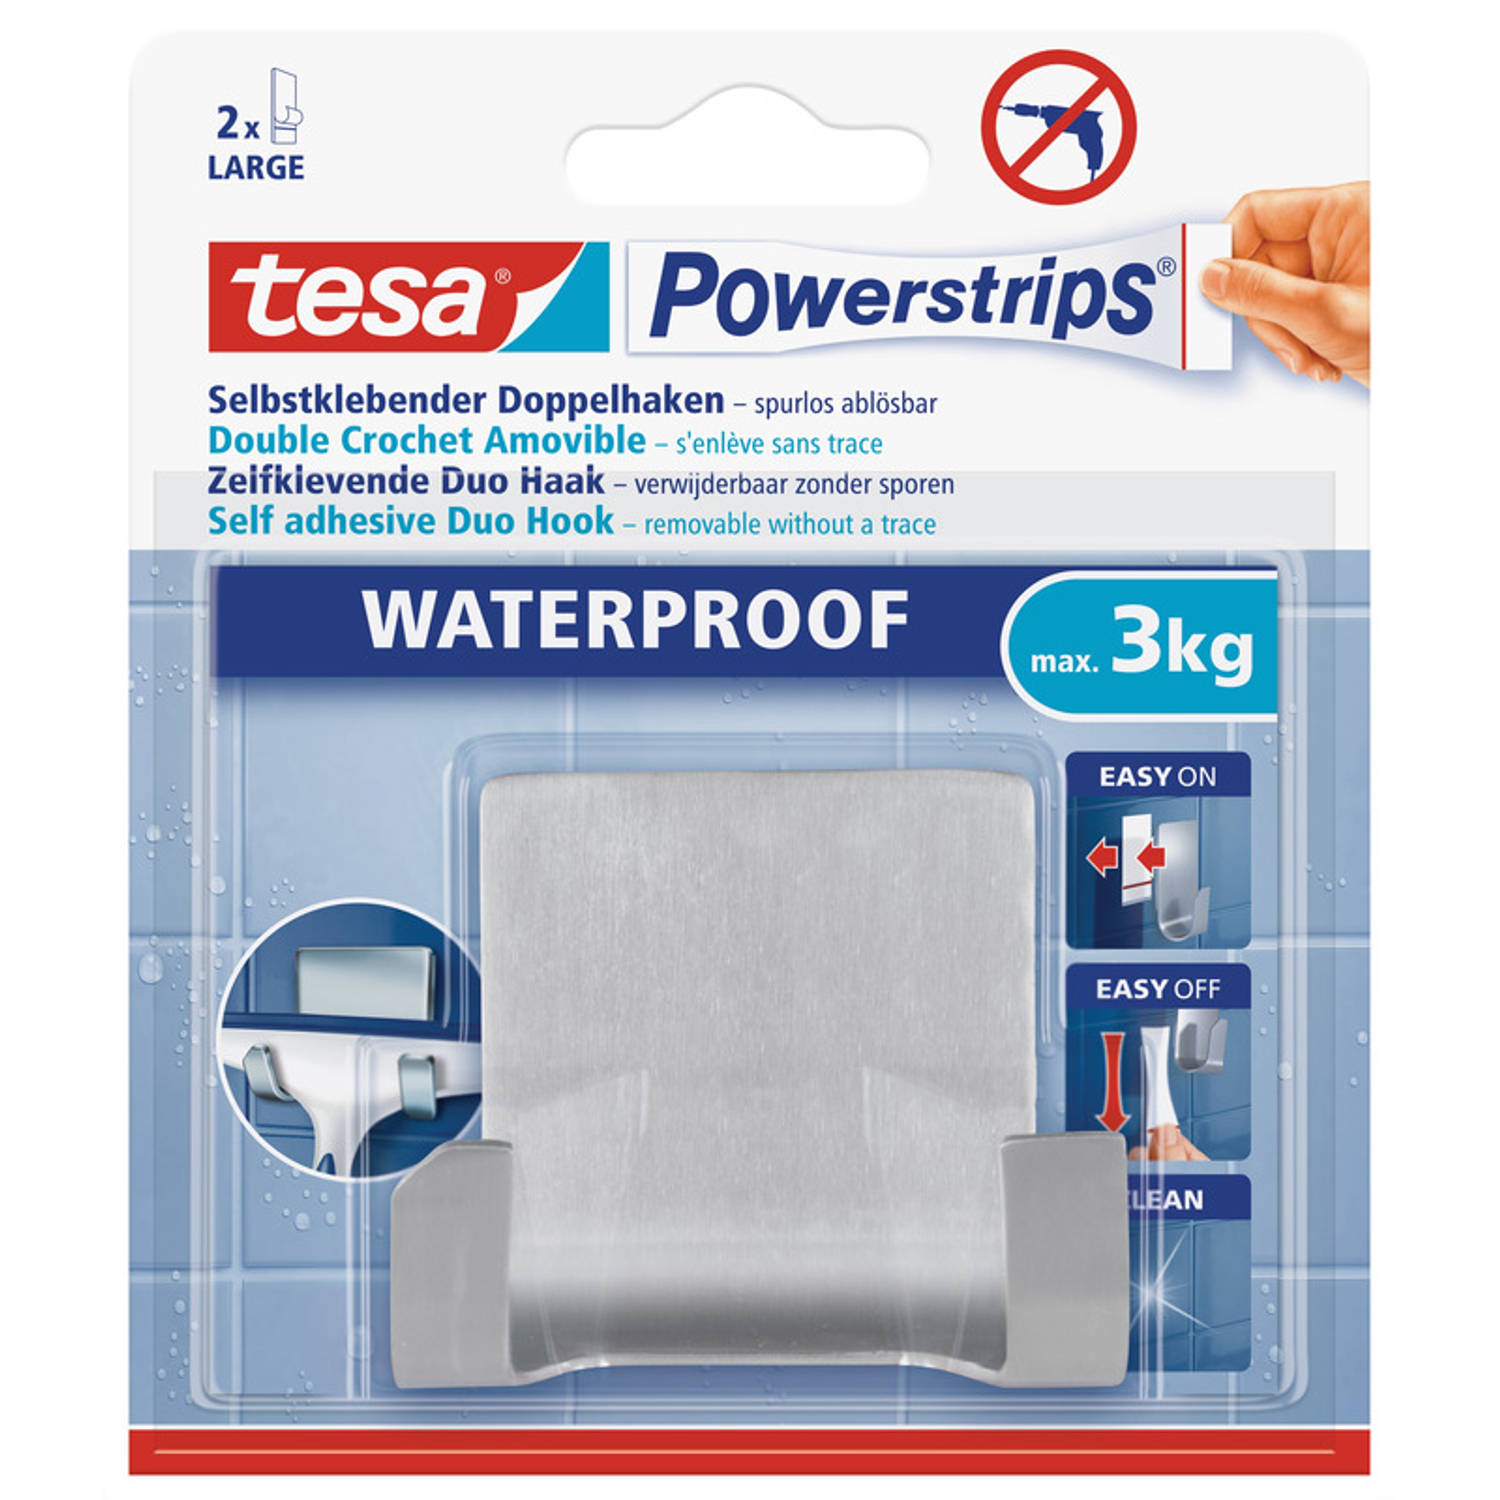 Powerstrips RVS dubbele haak waterproof Tesa 1 stuks - Handdoekhaakjes